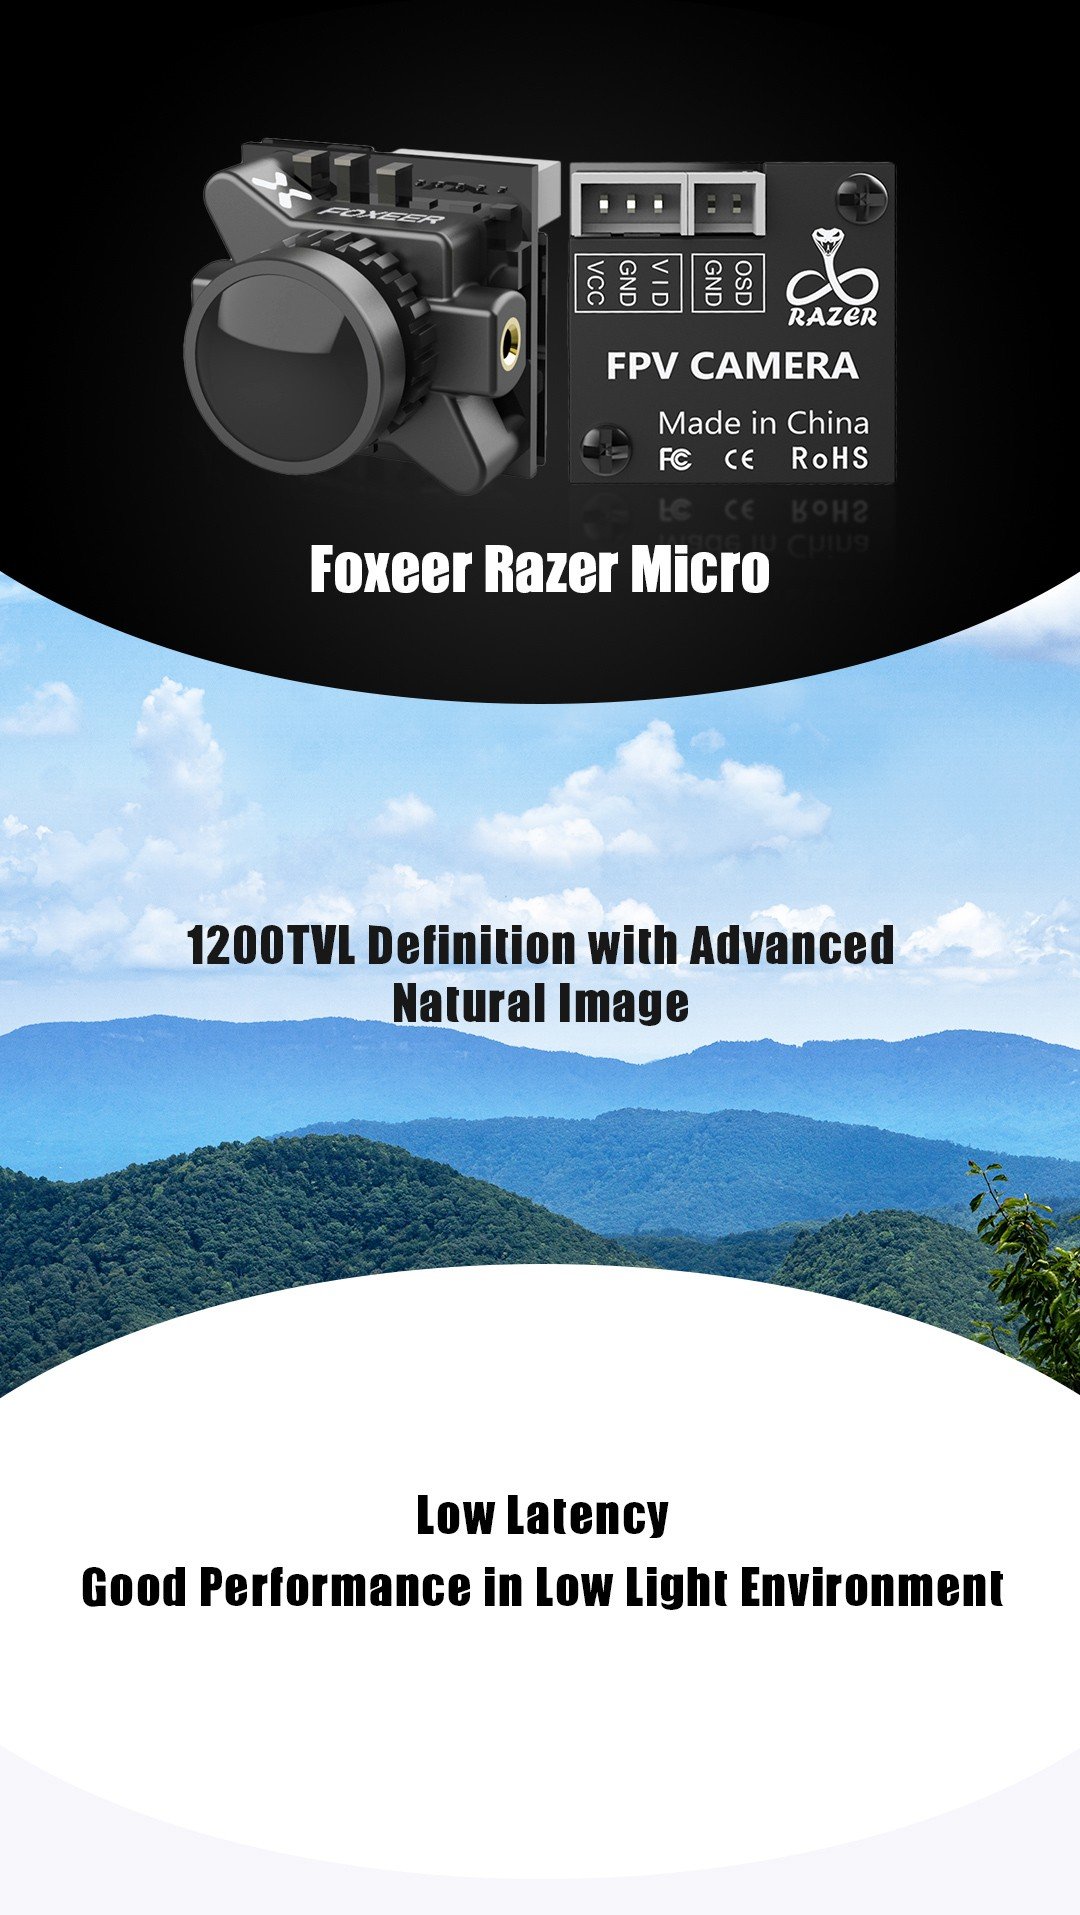 Foxeer Razer Micro 1200TVL 16:9 PAL/NSTC CMOS FPV Camera (1.8mm) - Black 9 - Foxeer